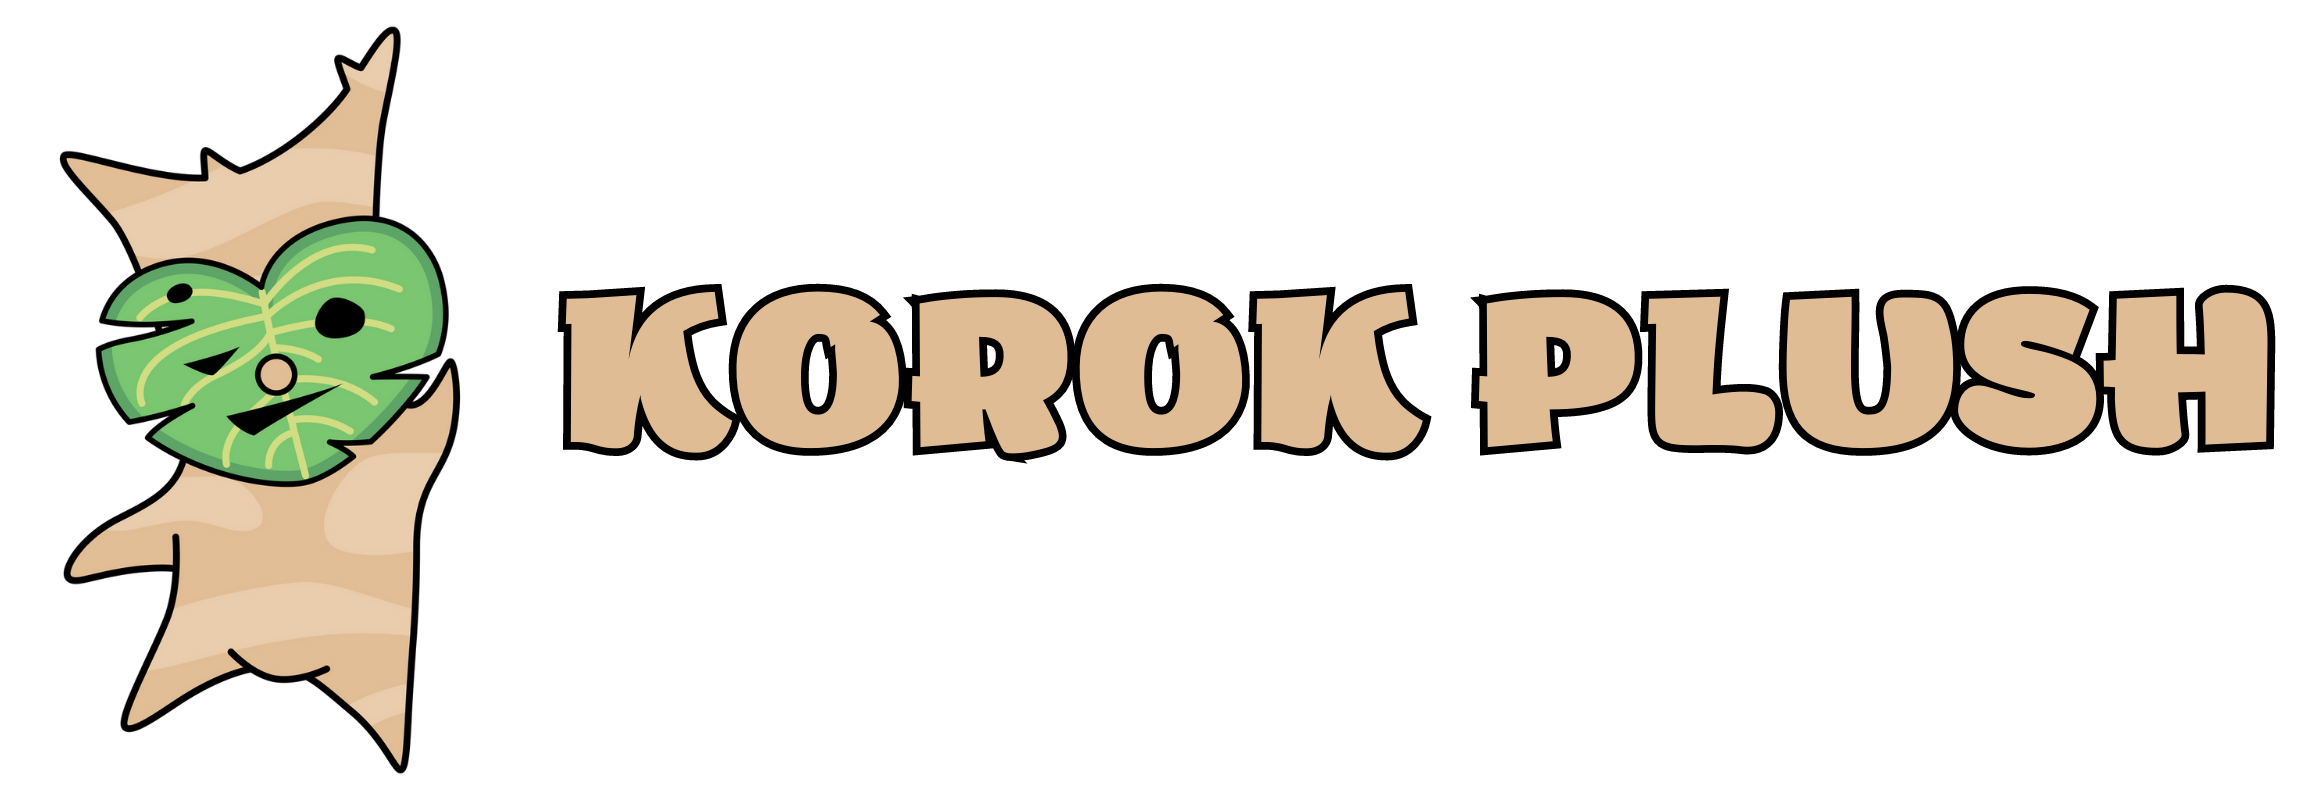 korok plush logo - Korok Plush